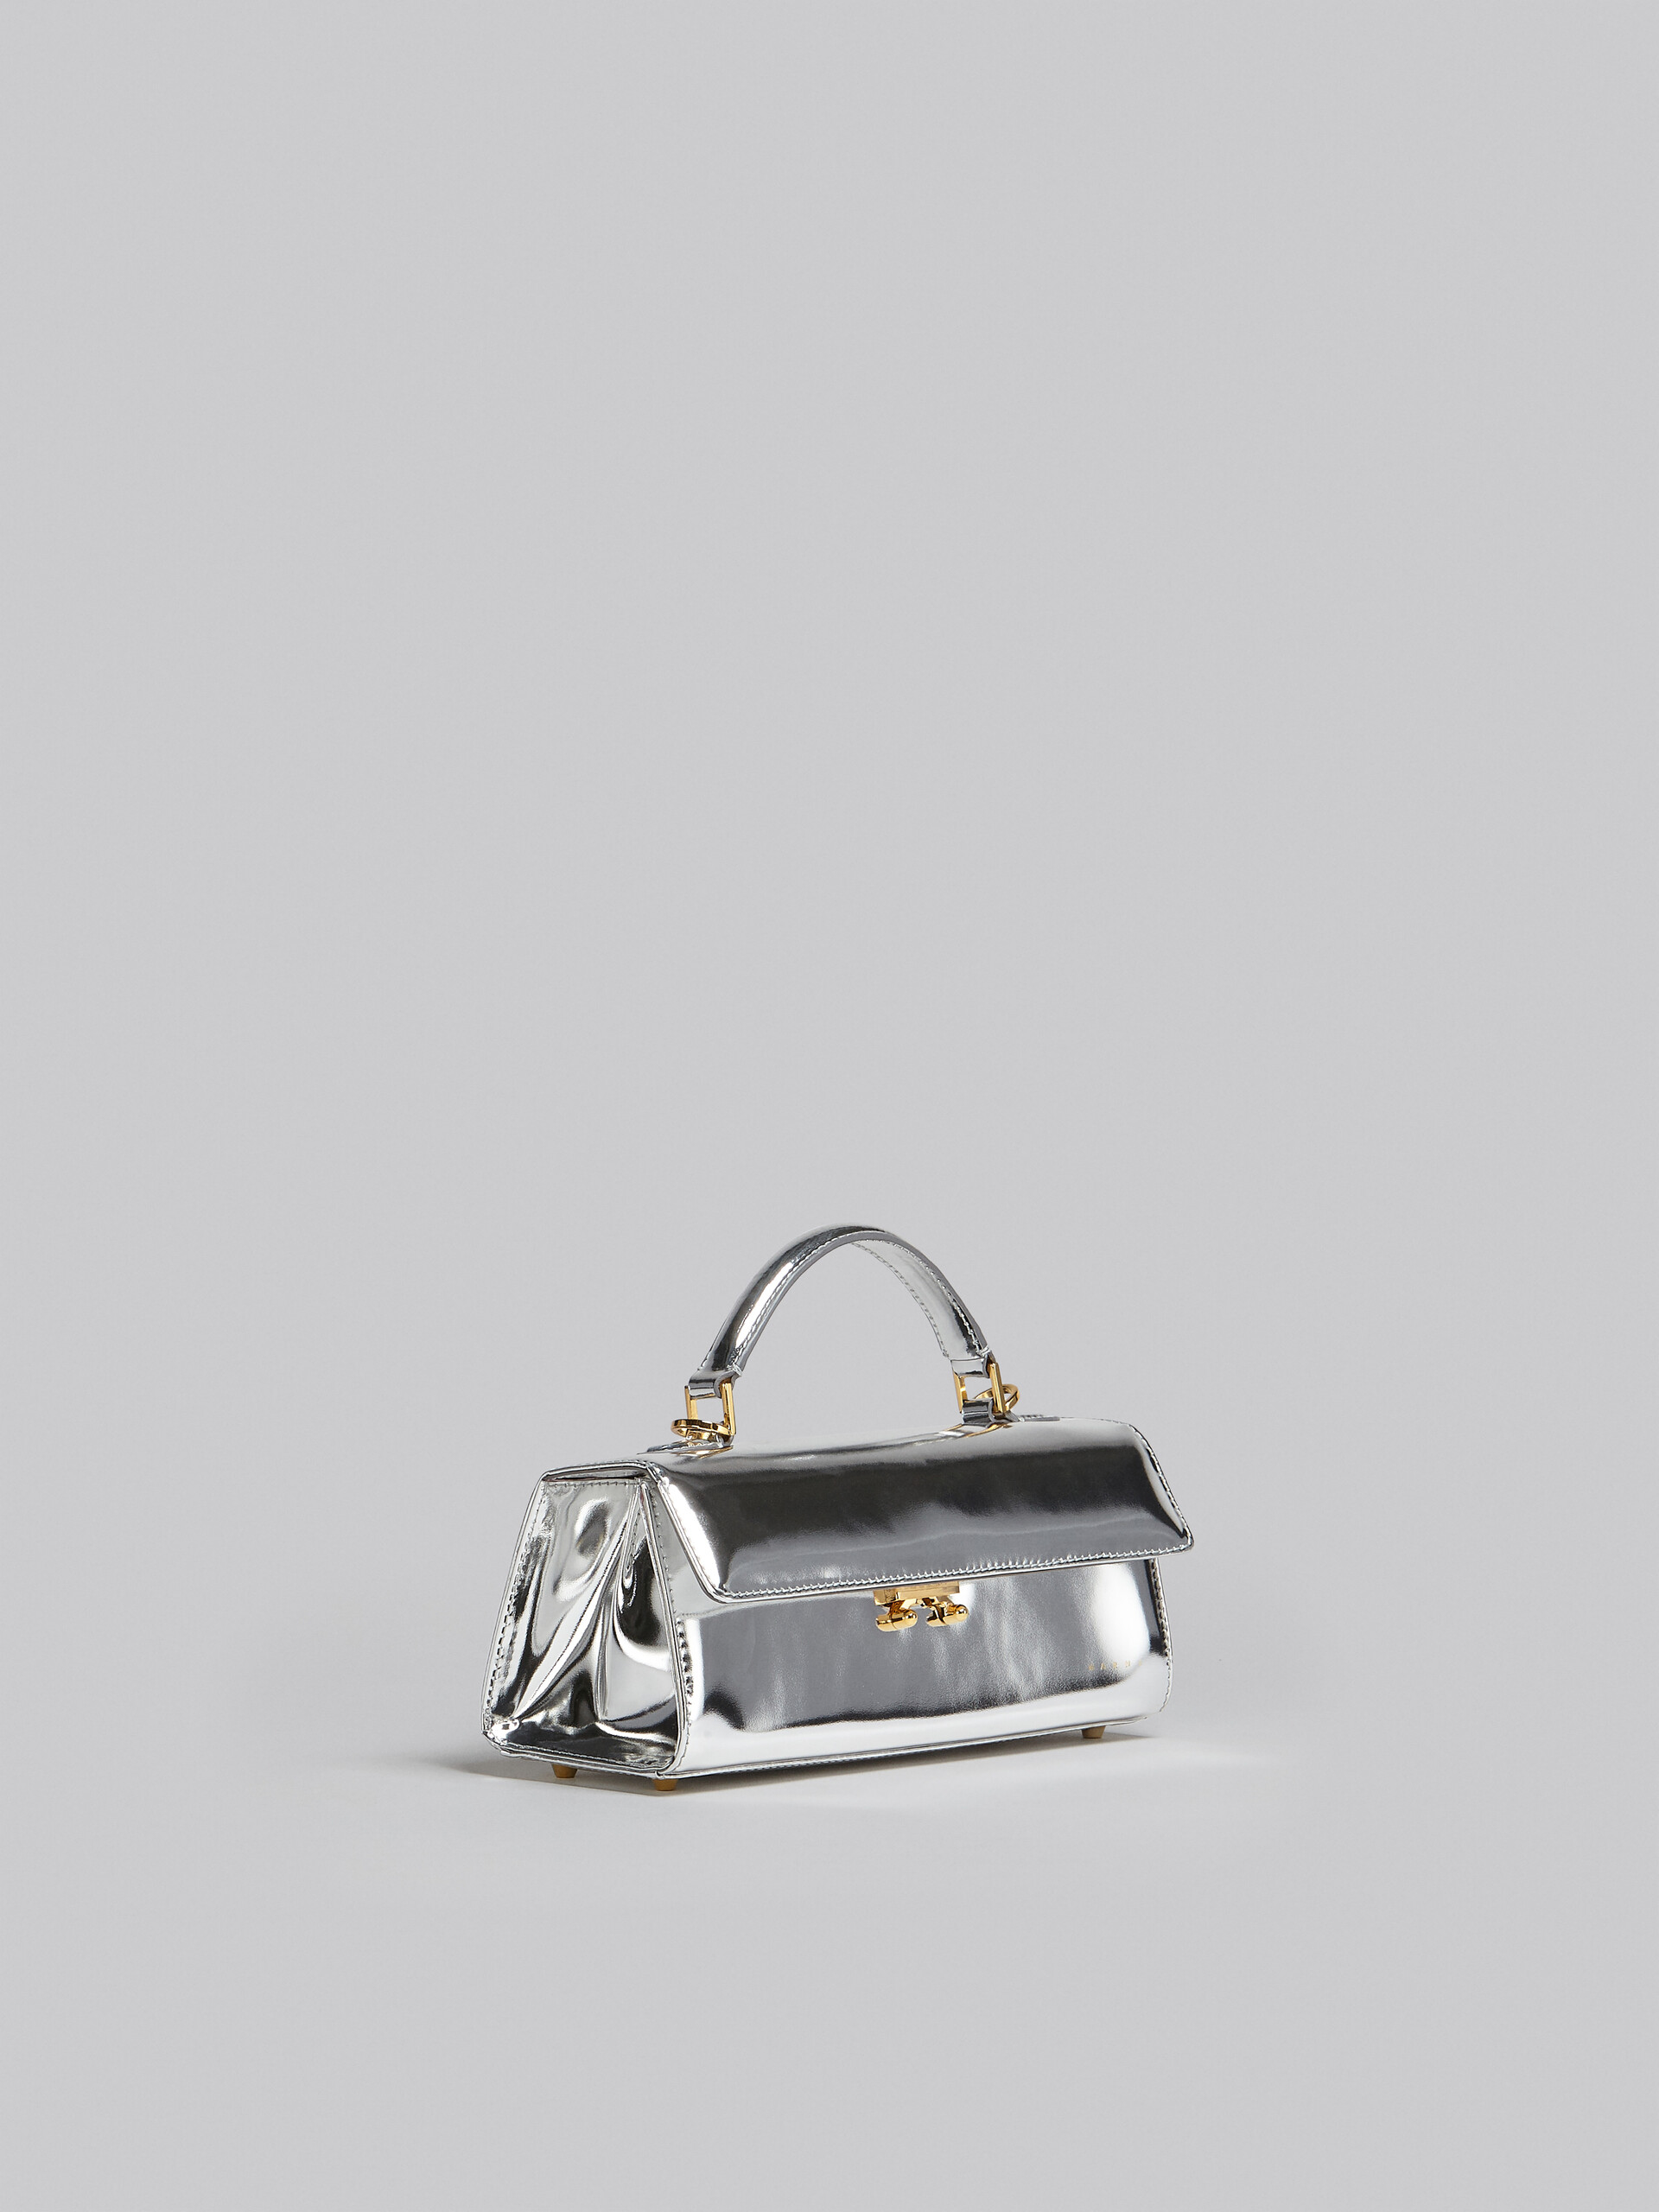 Relativity Medium Bag in silver mirrored leather